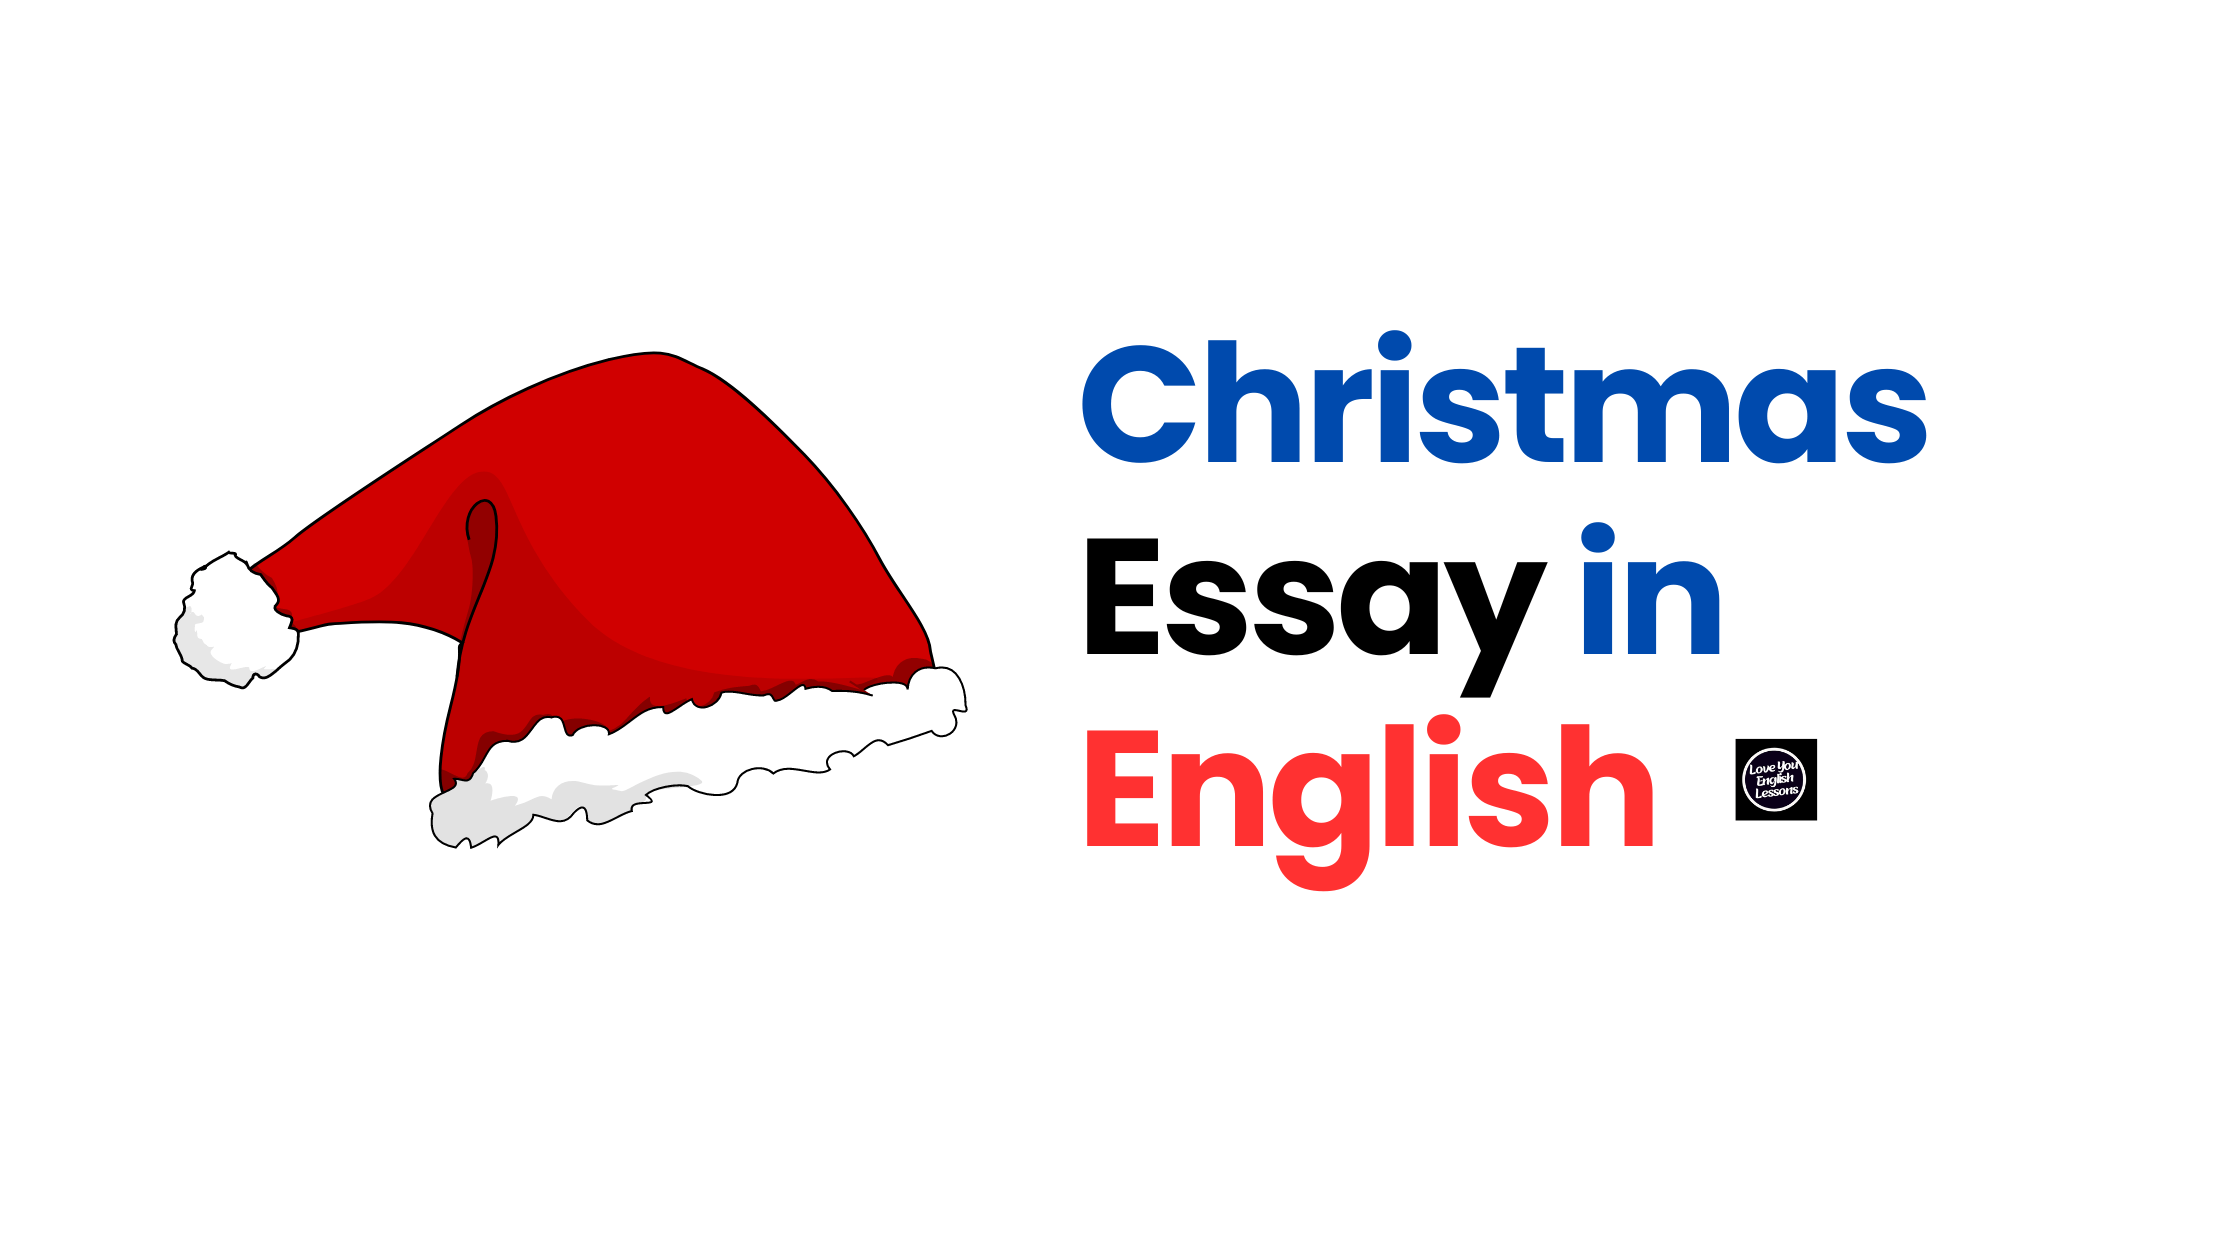 Christmas essay in English